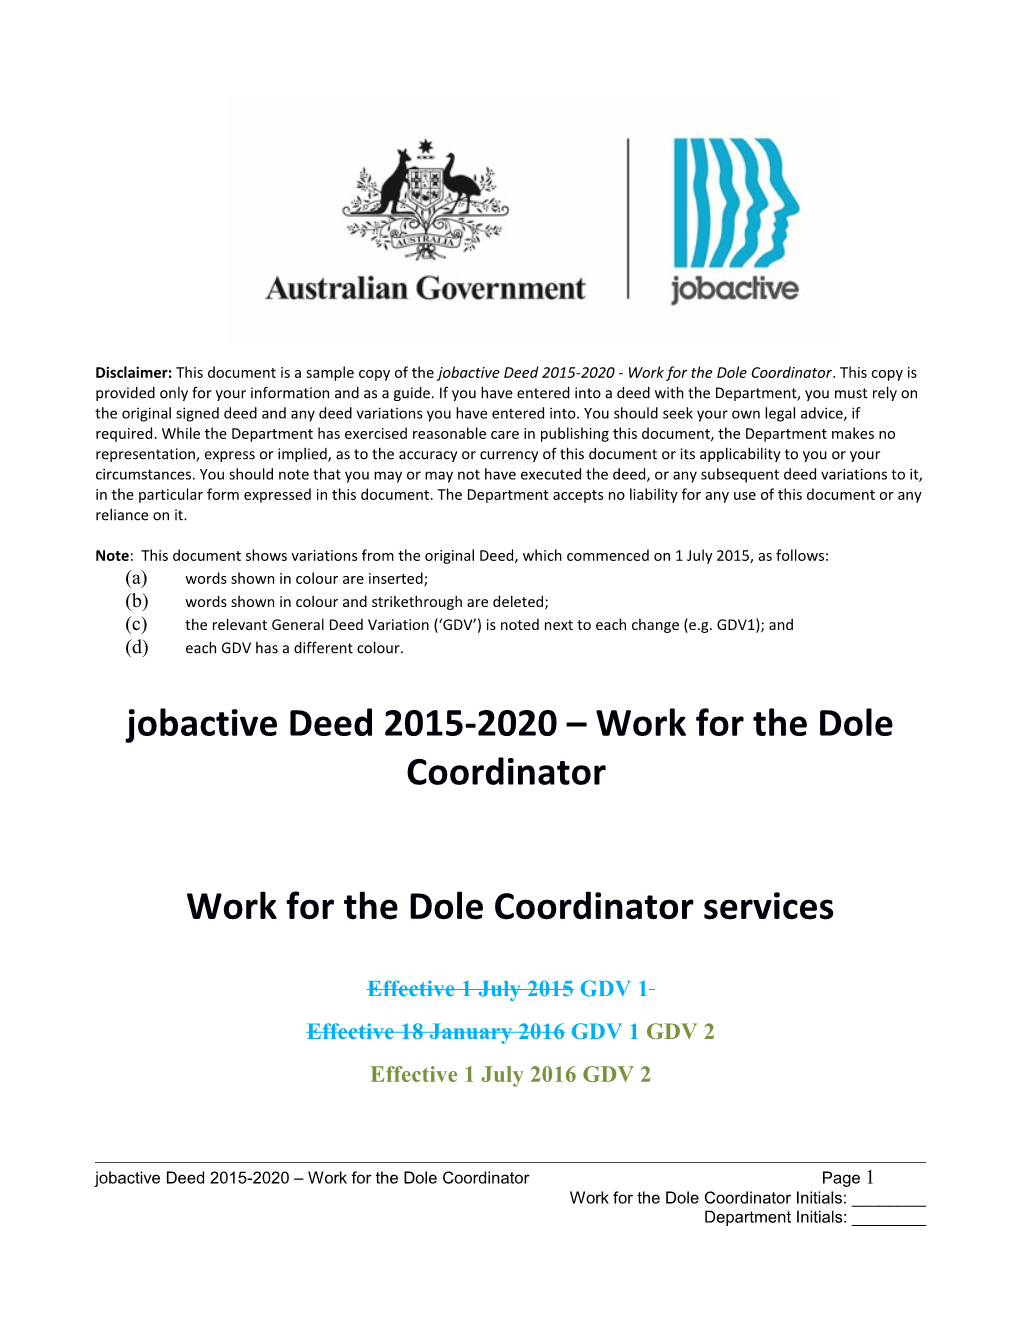 Jobactive Deed 2015-2020 Work for the Dole Coordinator